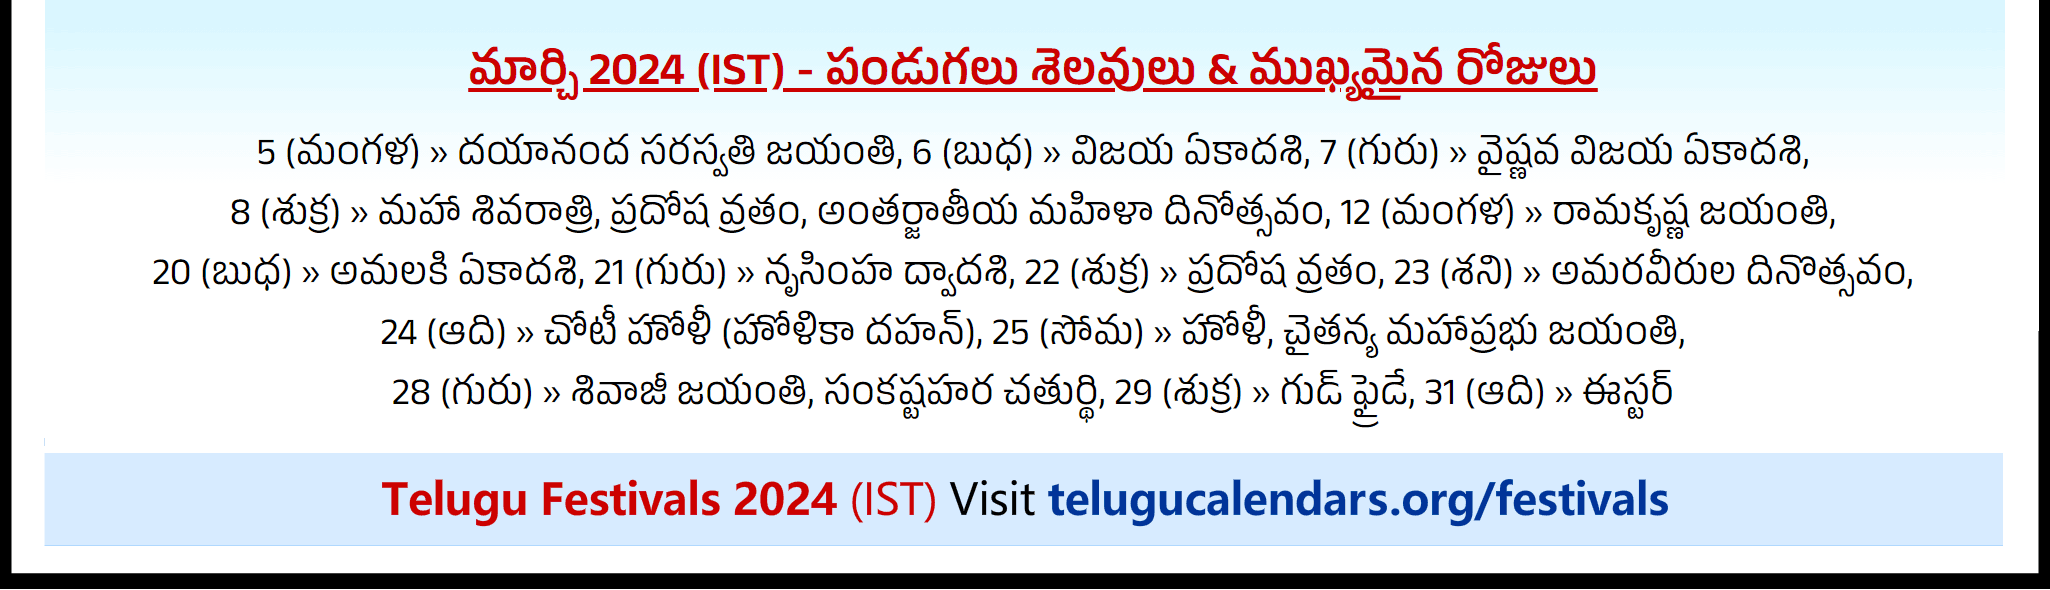 Telugu Festivals 2024 March London